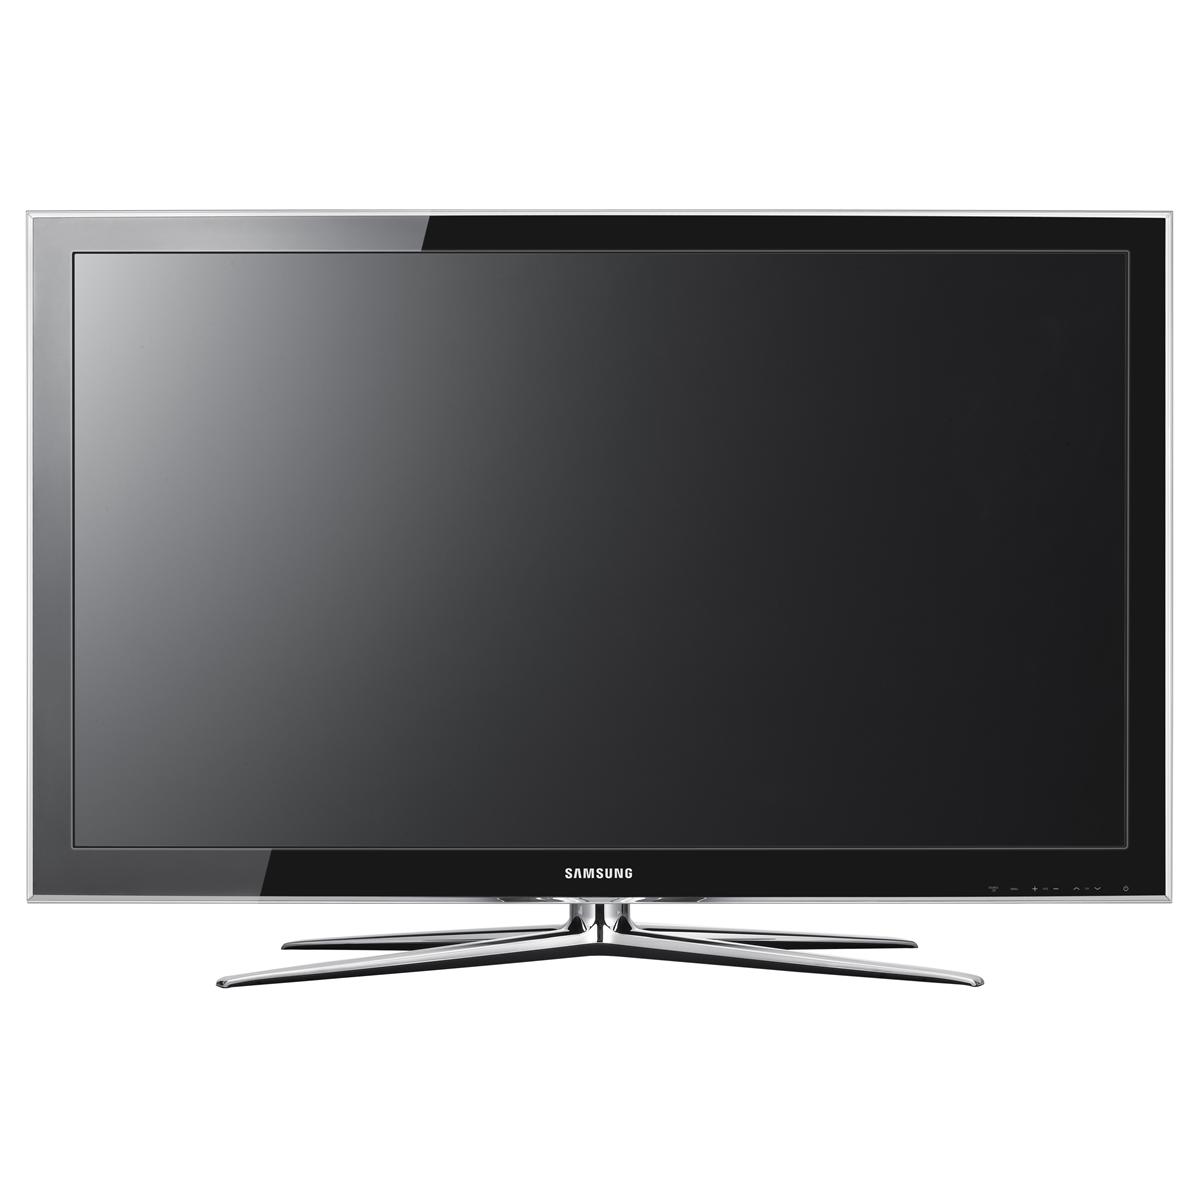 Samsung Series Lcd Tv Wallpaper New Technology Information